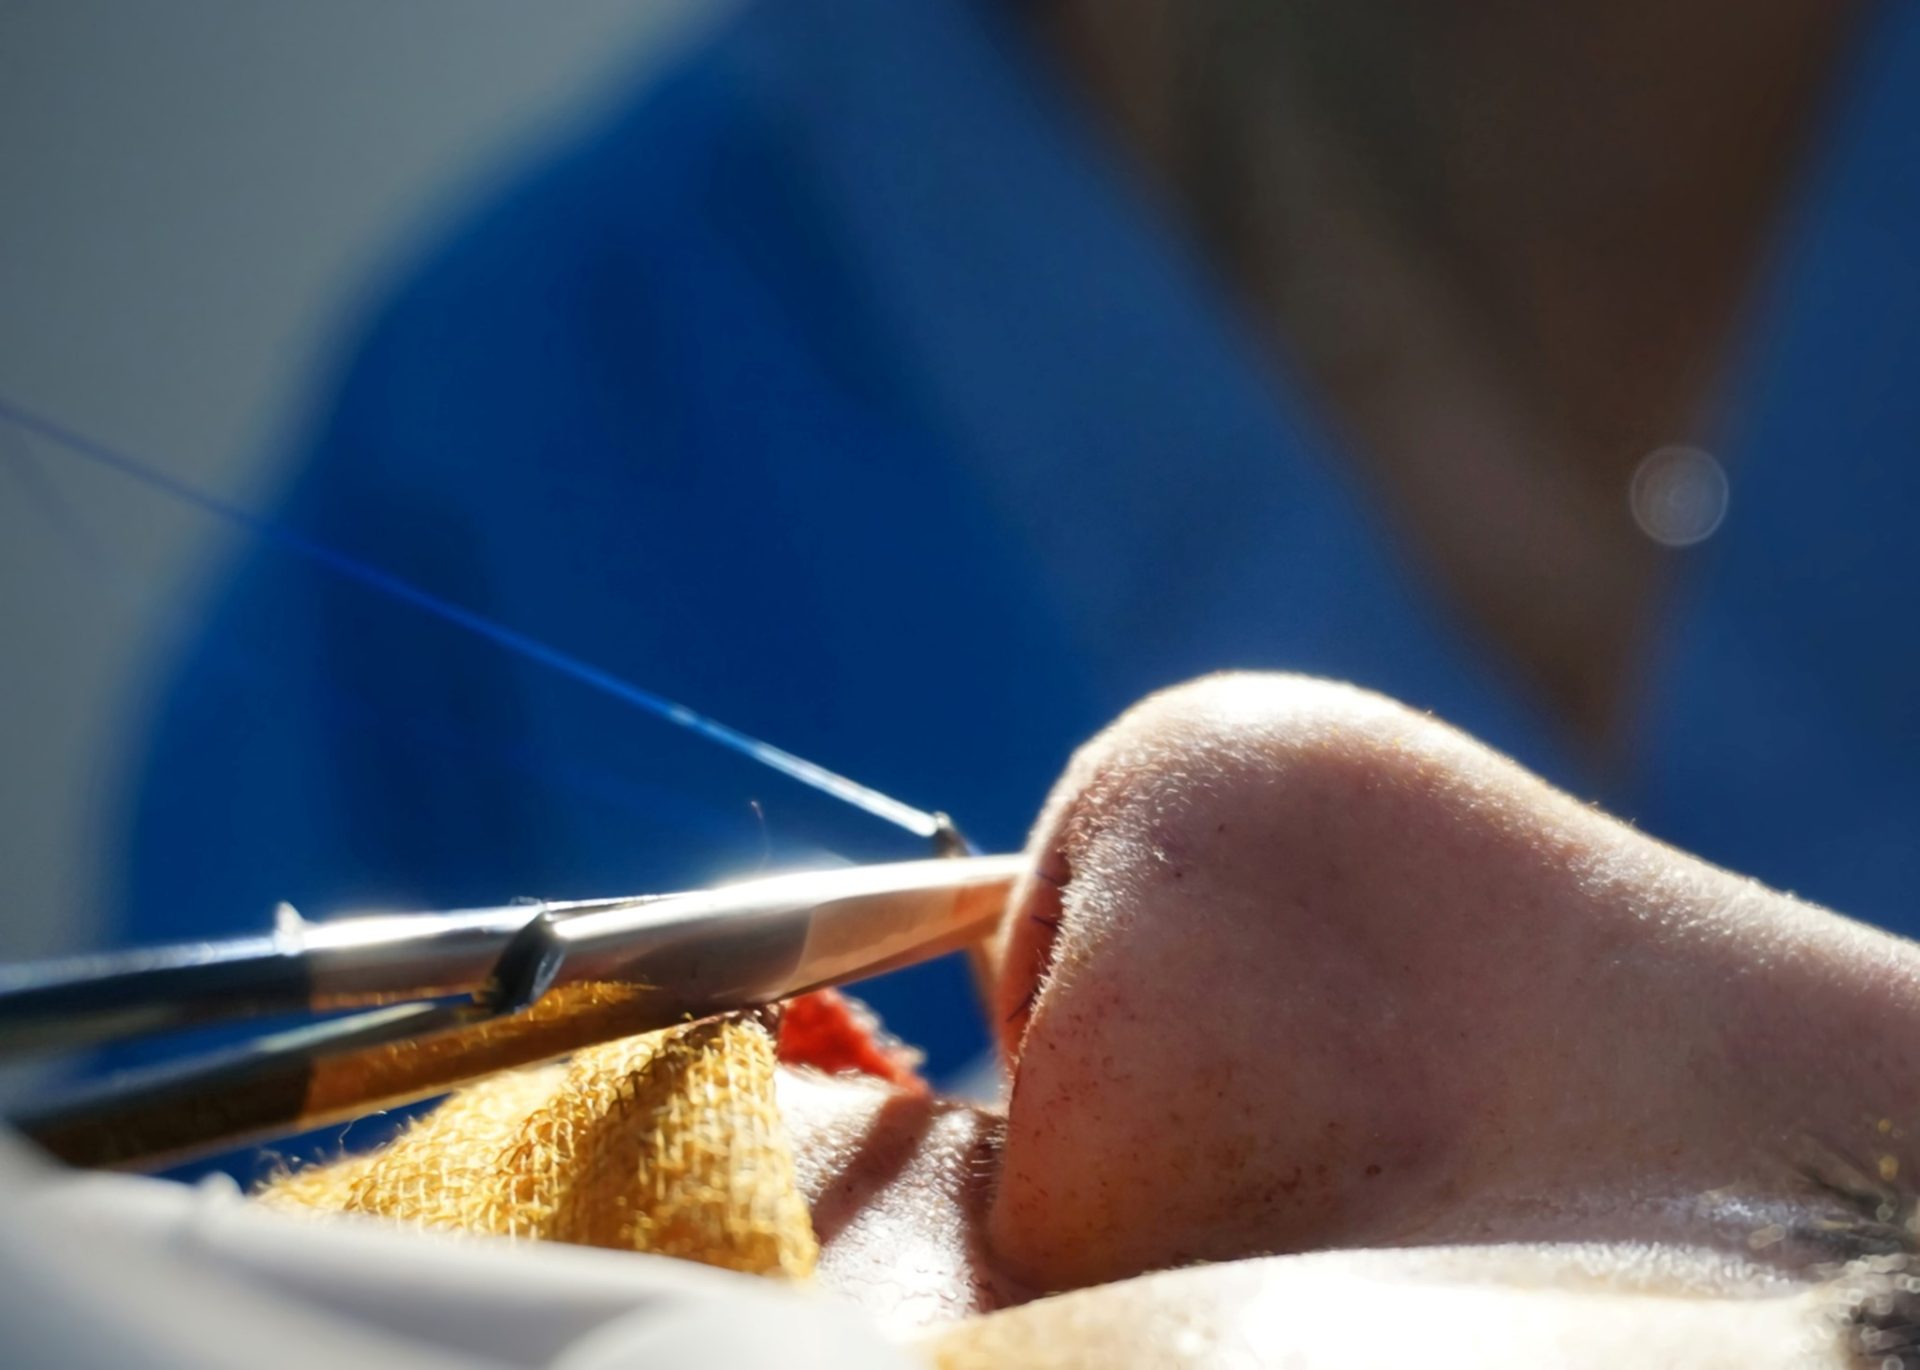 rhinoplasty surgery procedure